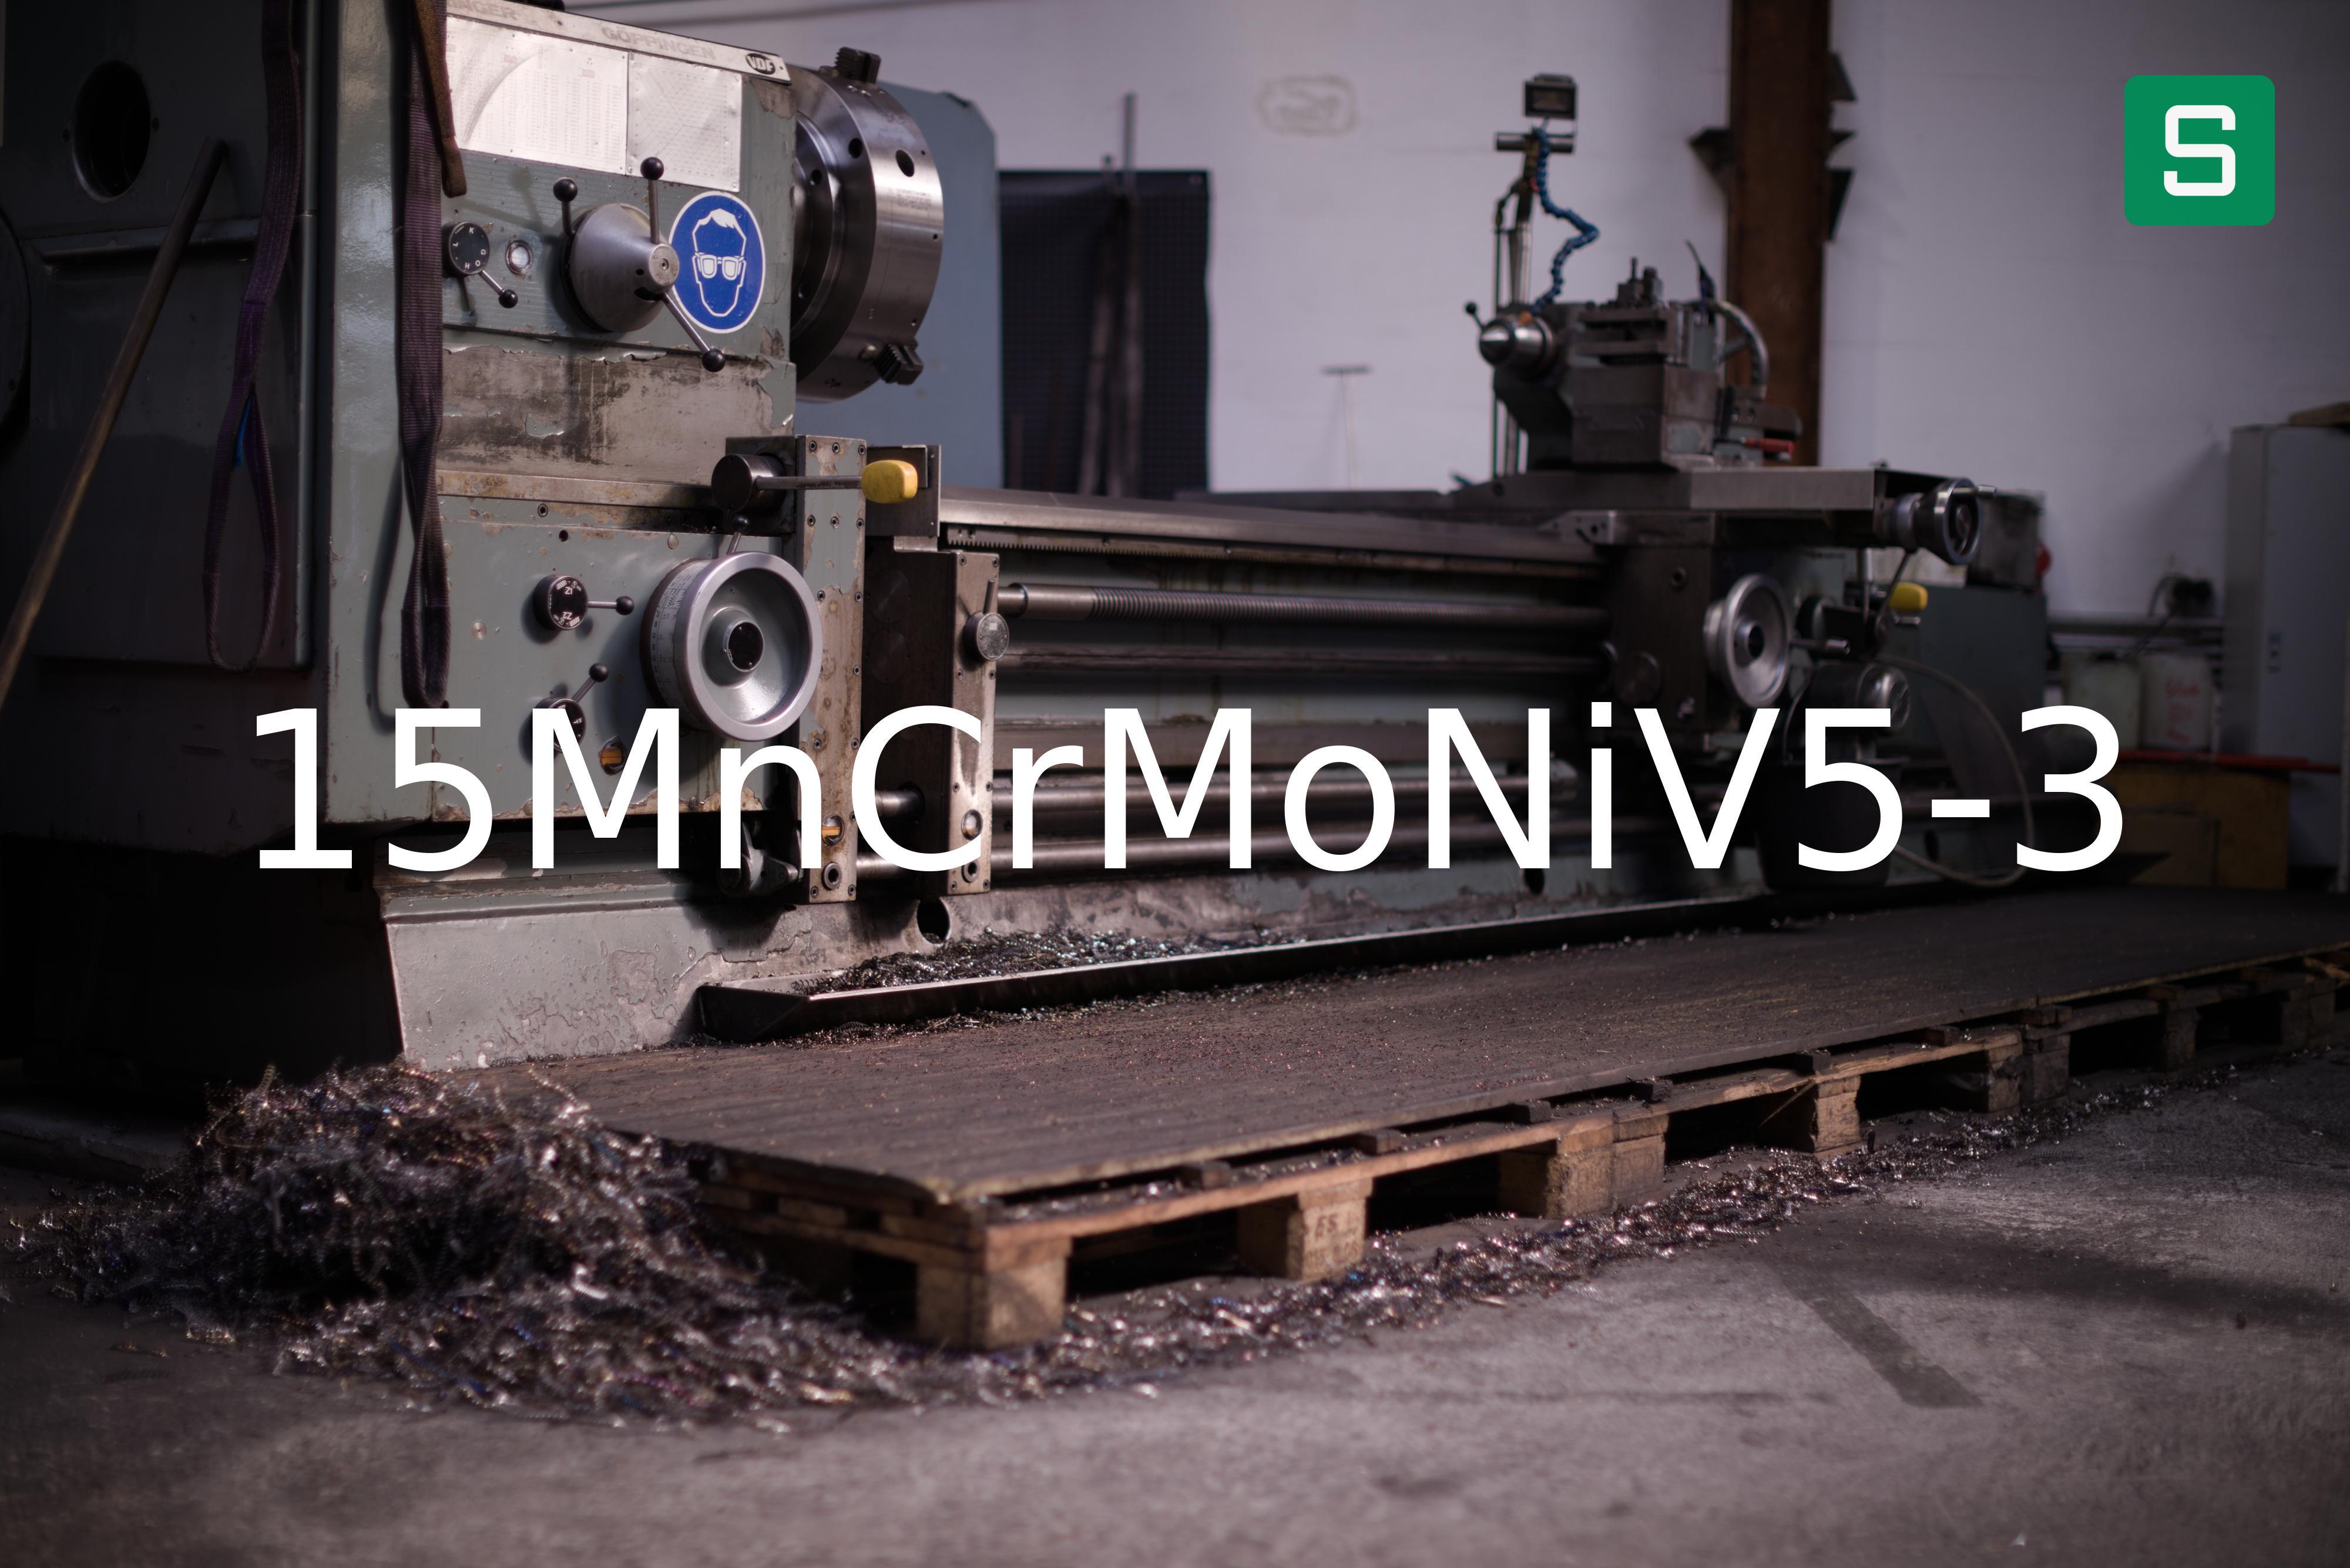 Steel Material: 15MnCrMoNiV5-3